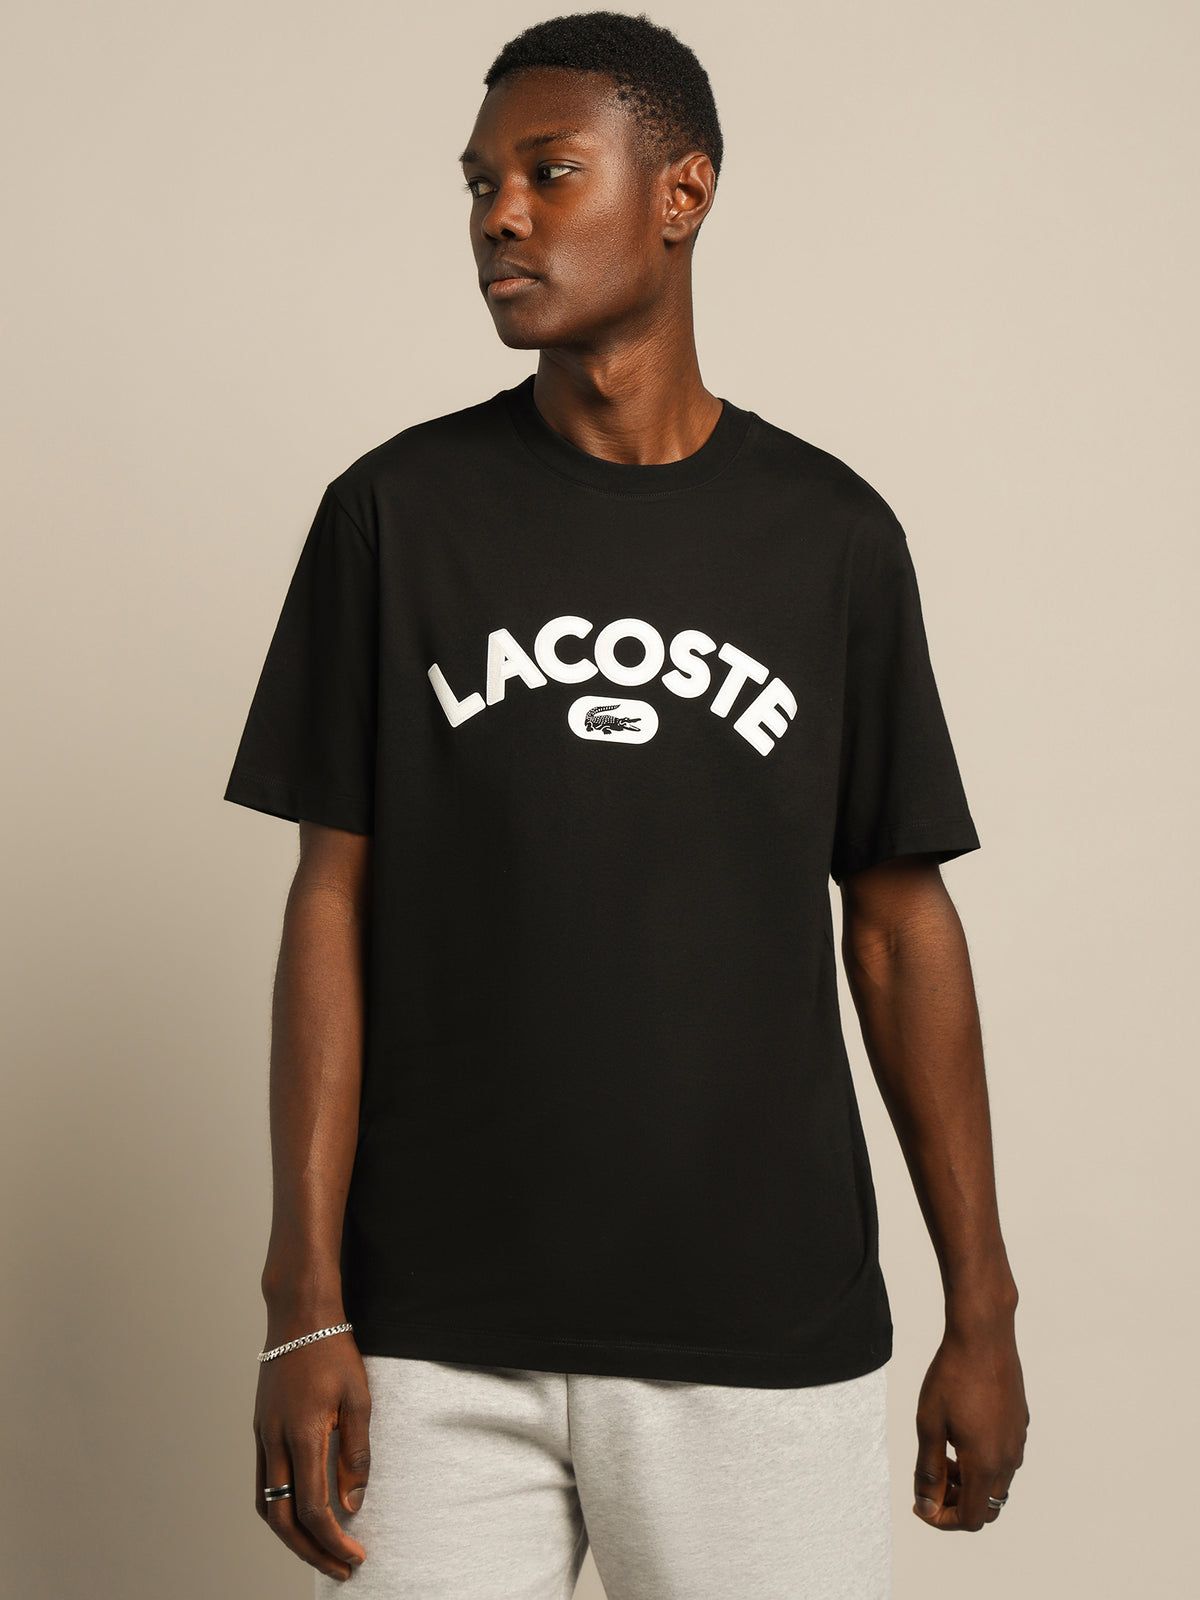 Croc Wording T-Shirt in Black